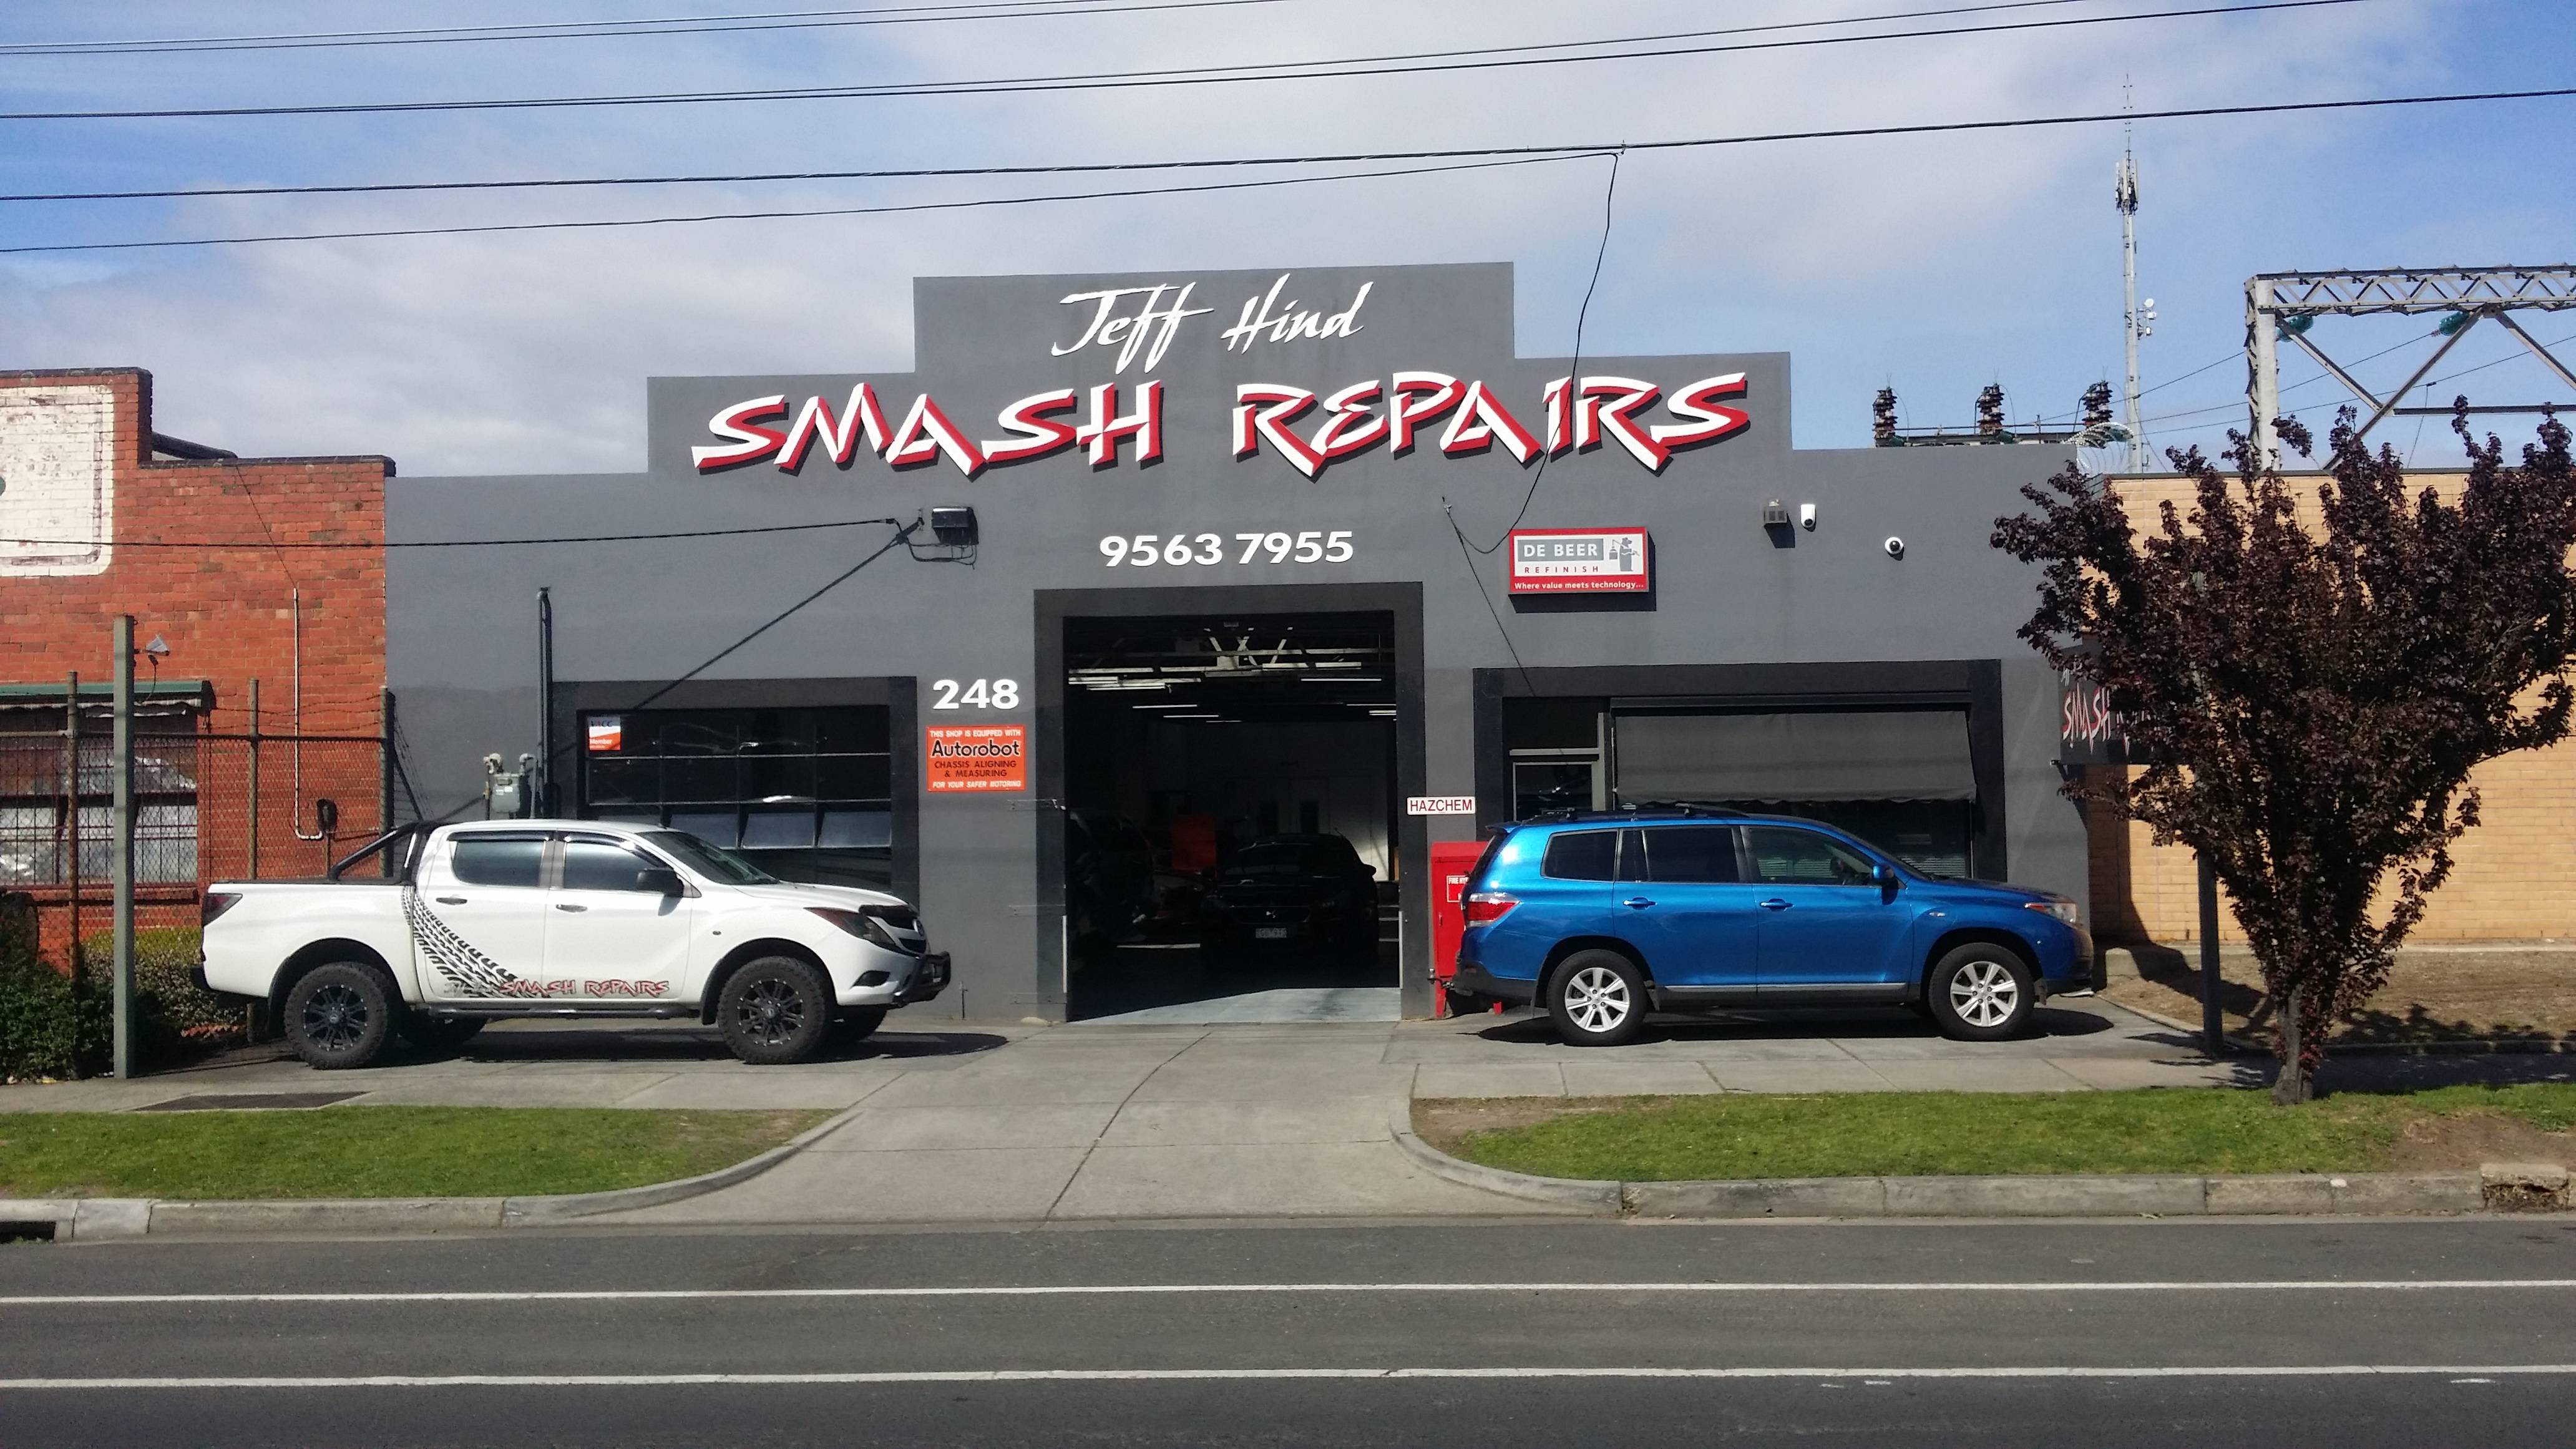 Jeffhind Smash Repairs best in repair and paint work